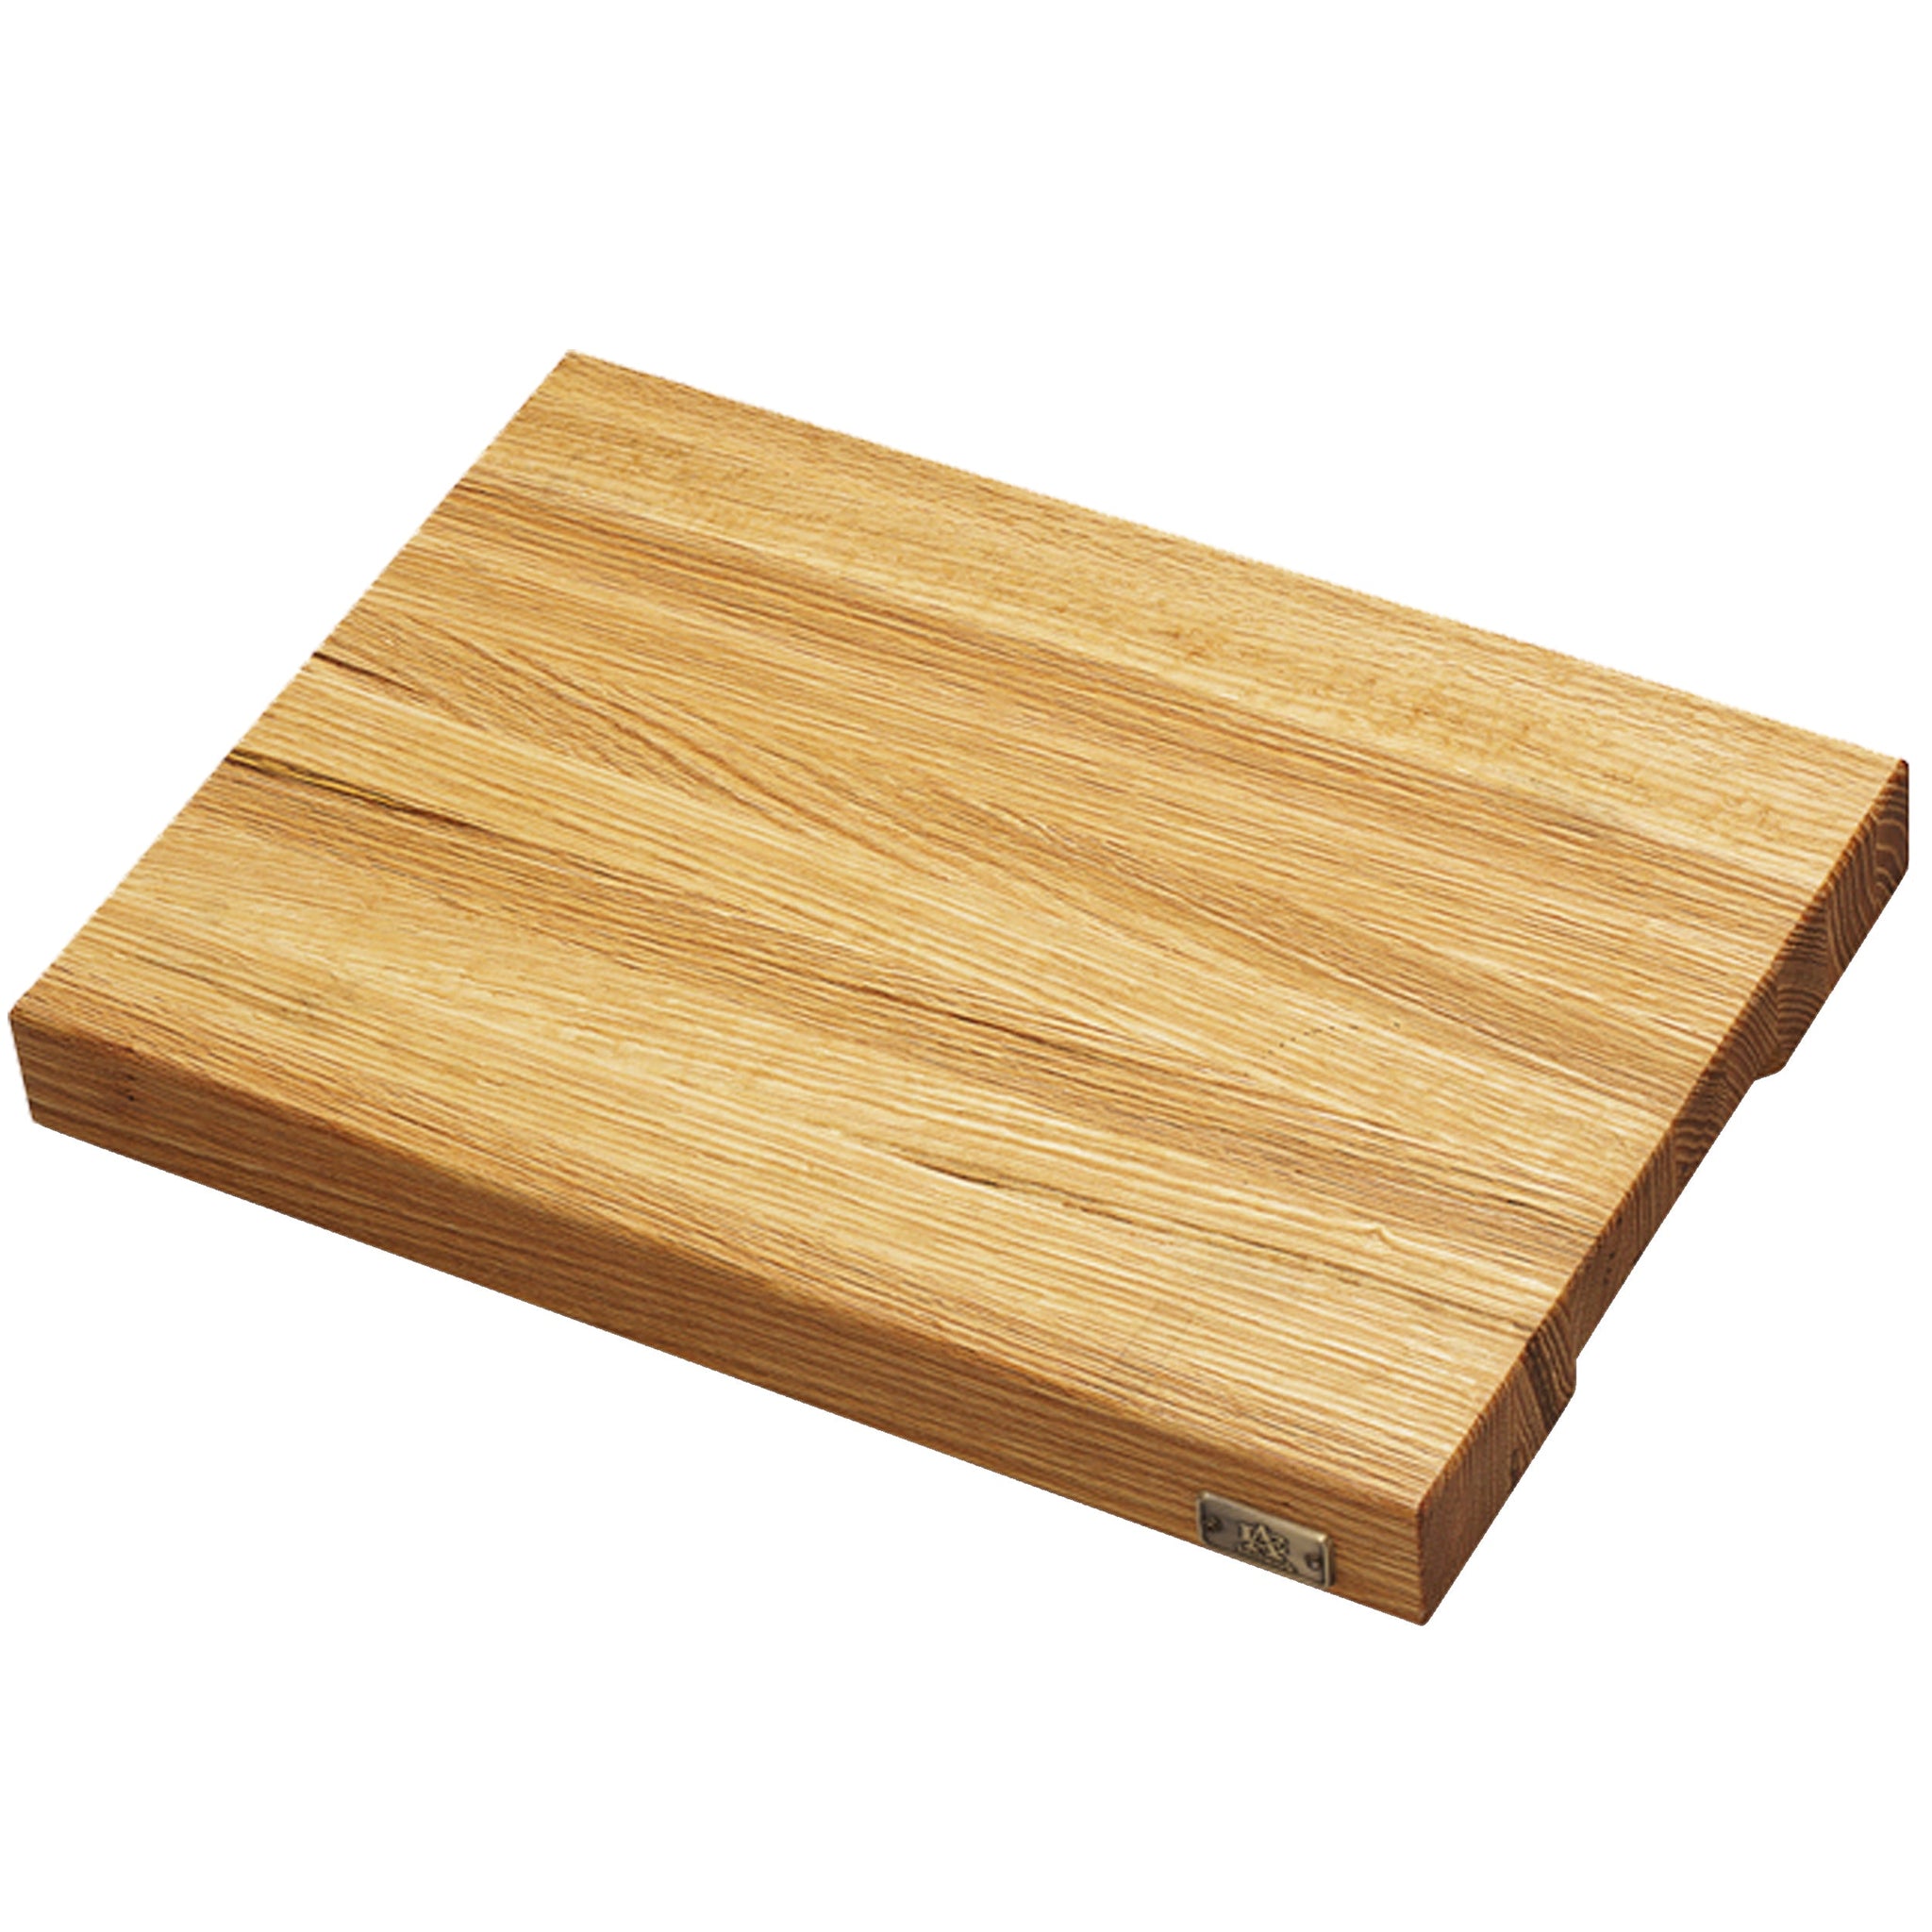 Mauricio Cutting Board Oak Wood Edge Grain Handmade ( with free gift)